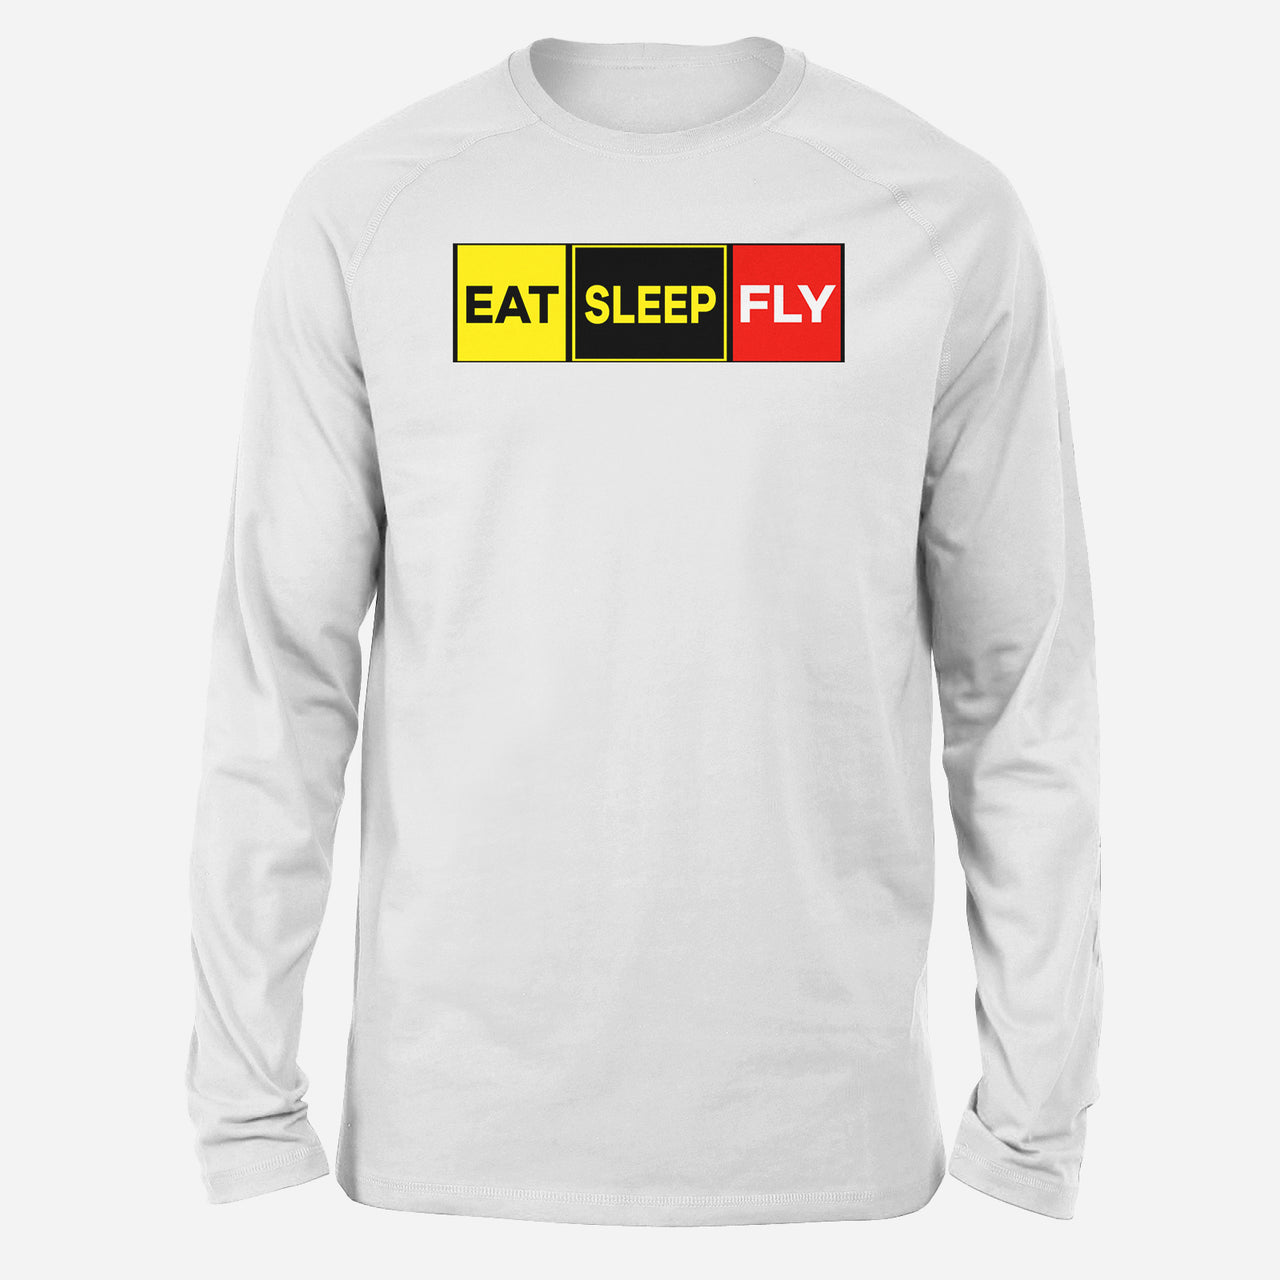 Eat Sleep Fly (Colourful) Designed Long-Sleeve T-Shirts